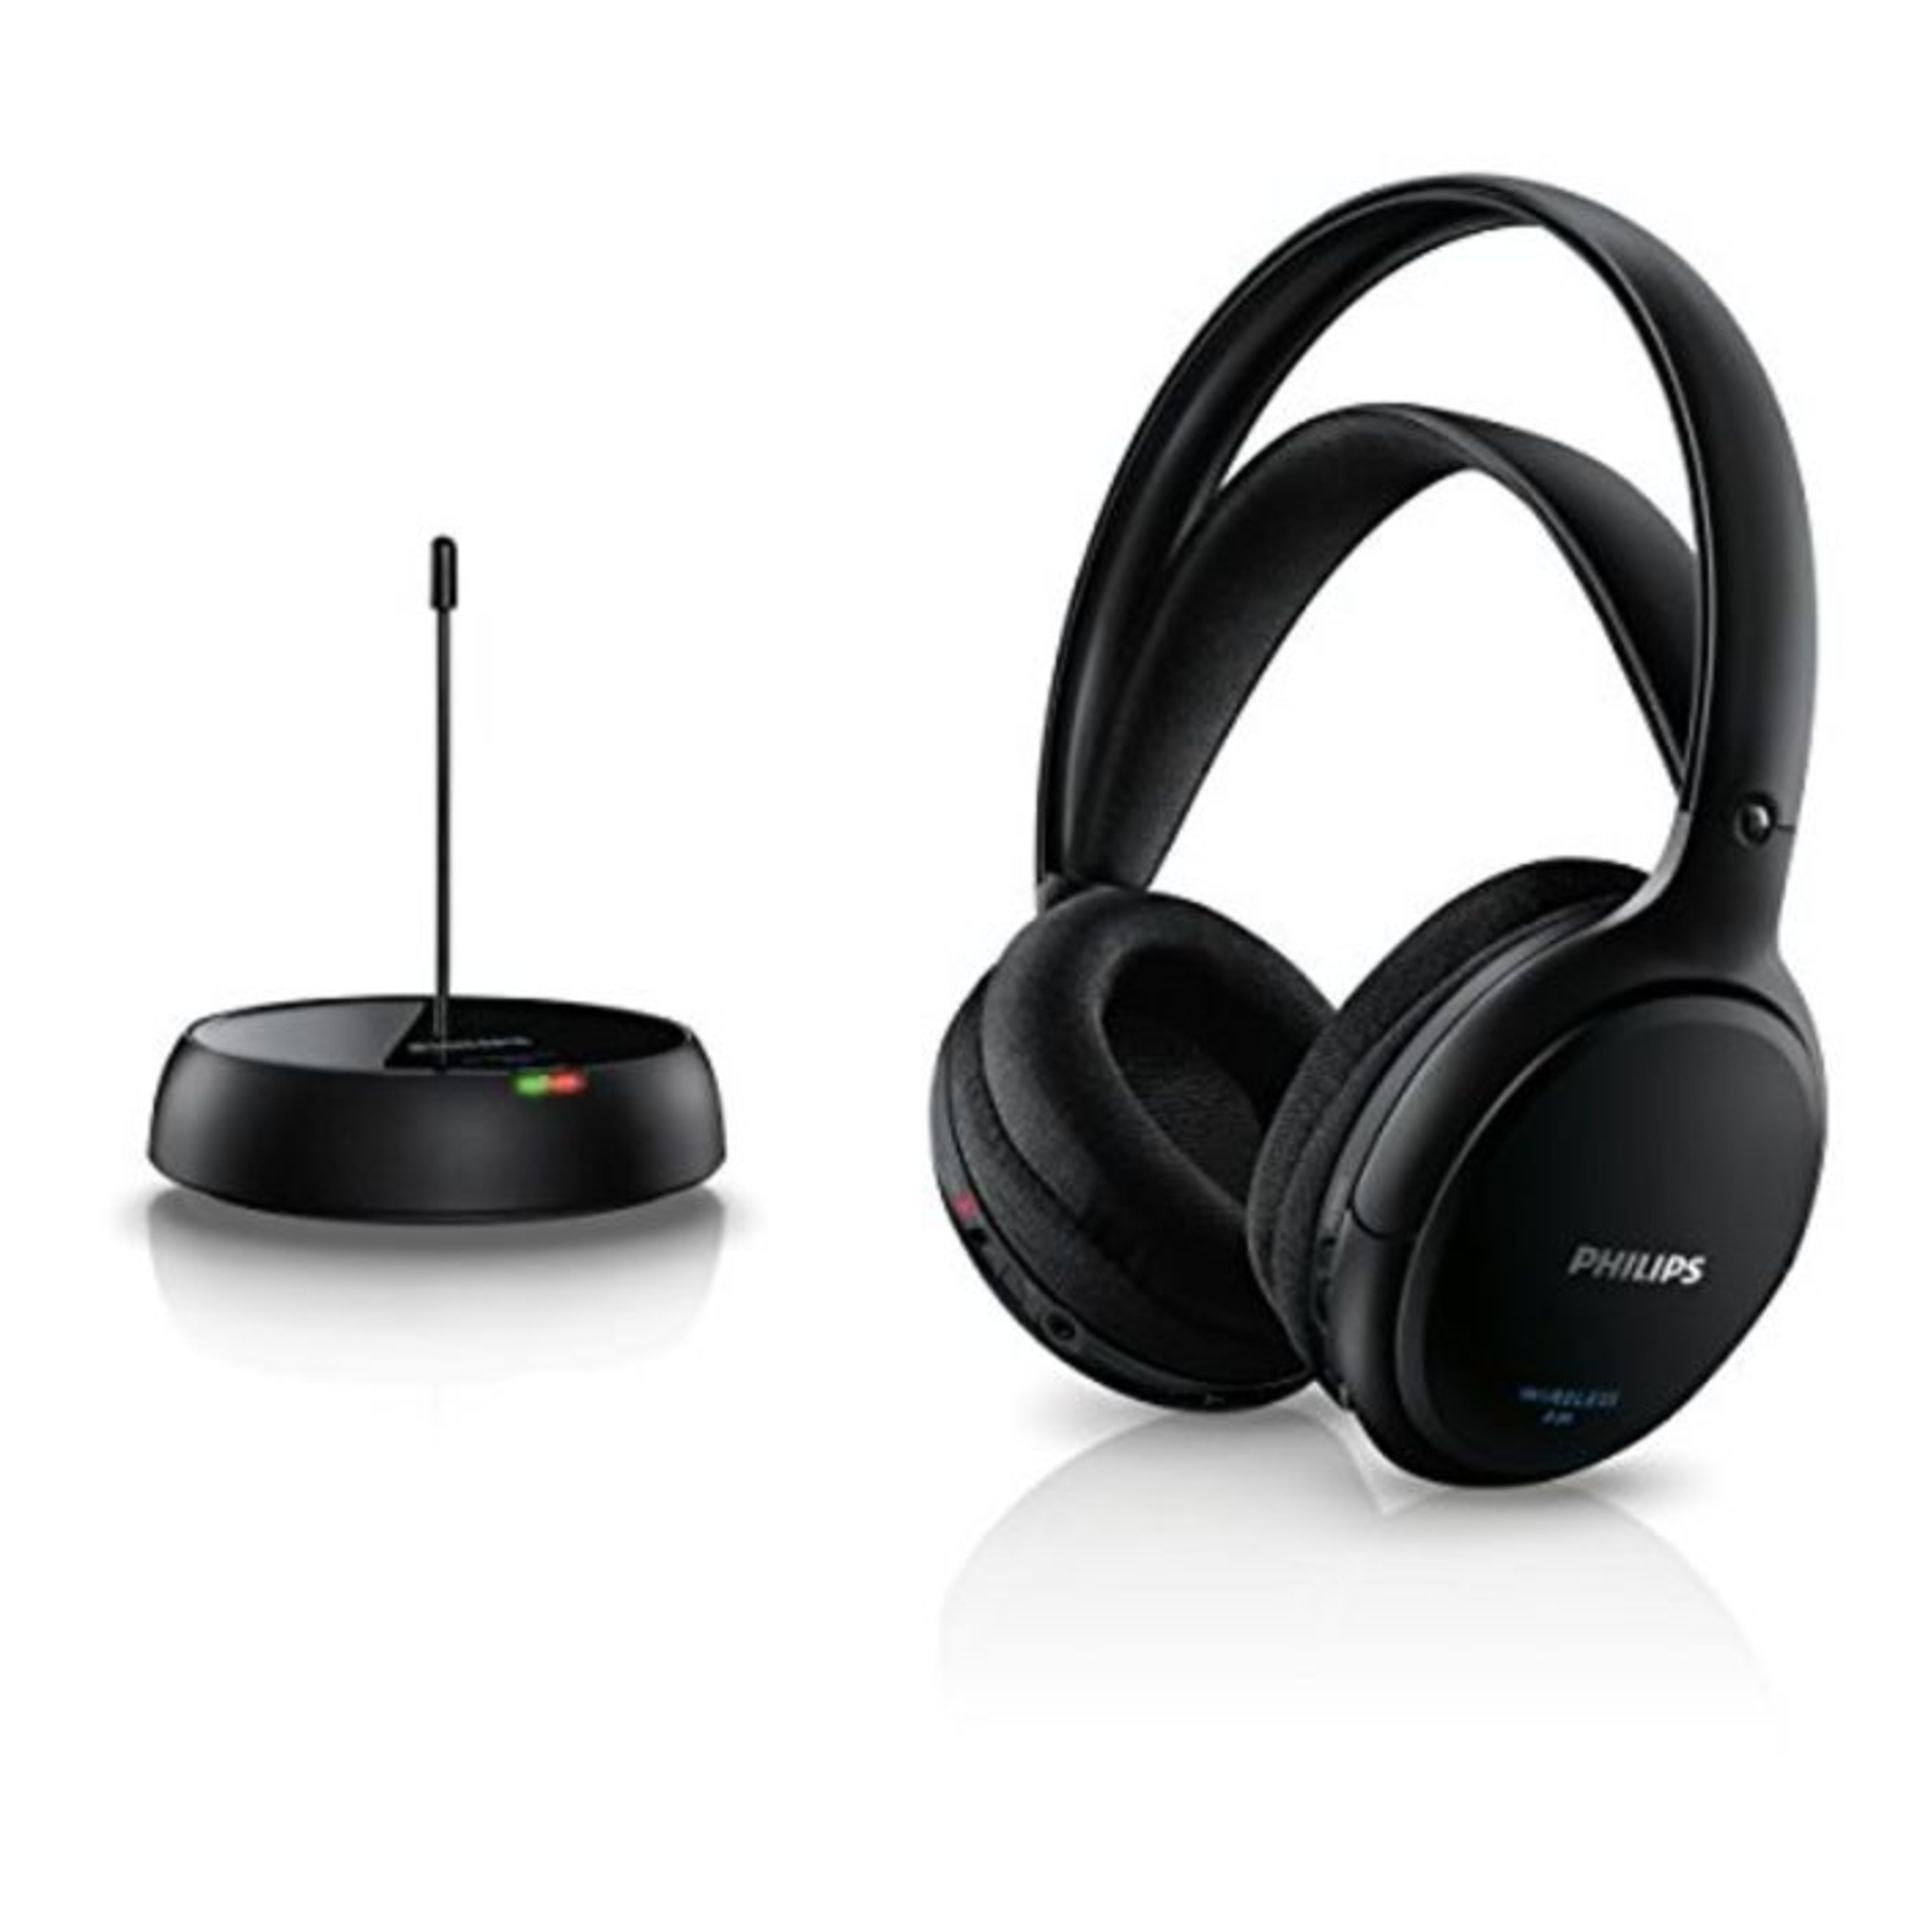 Philips HiFi headphones SHC5200/10 wireless HiFi headphones (great sound, wireless, re